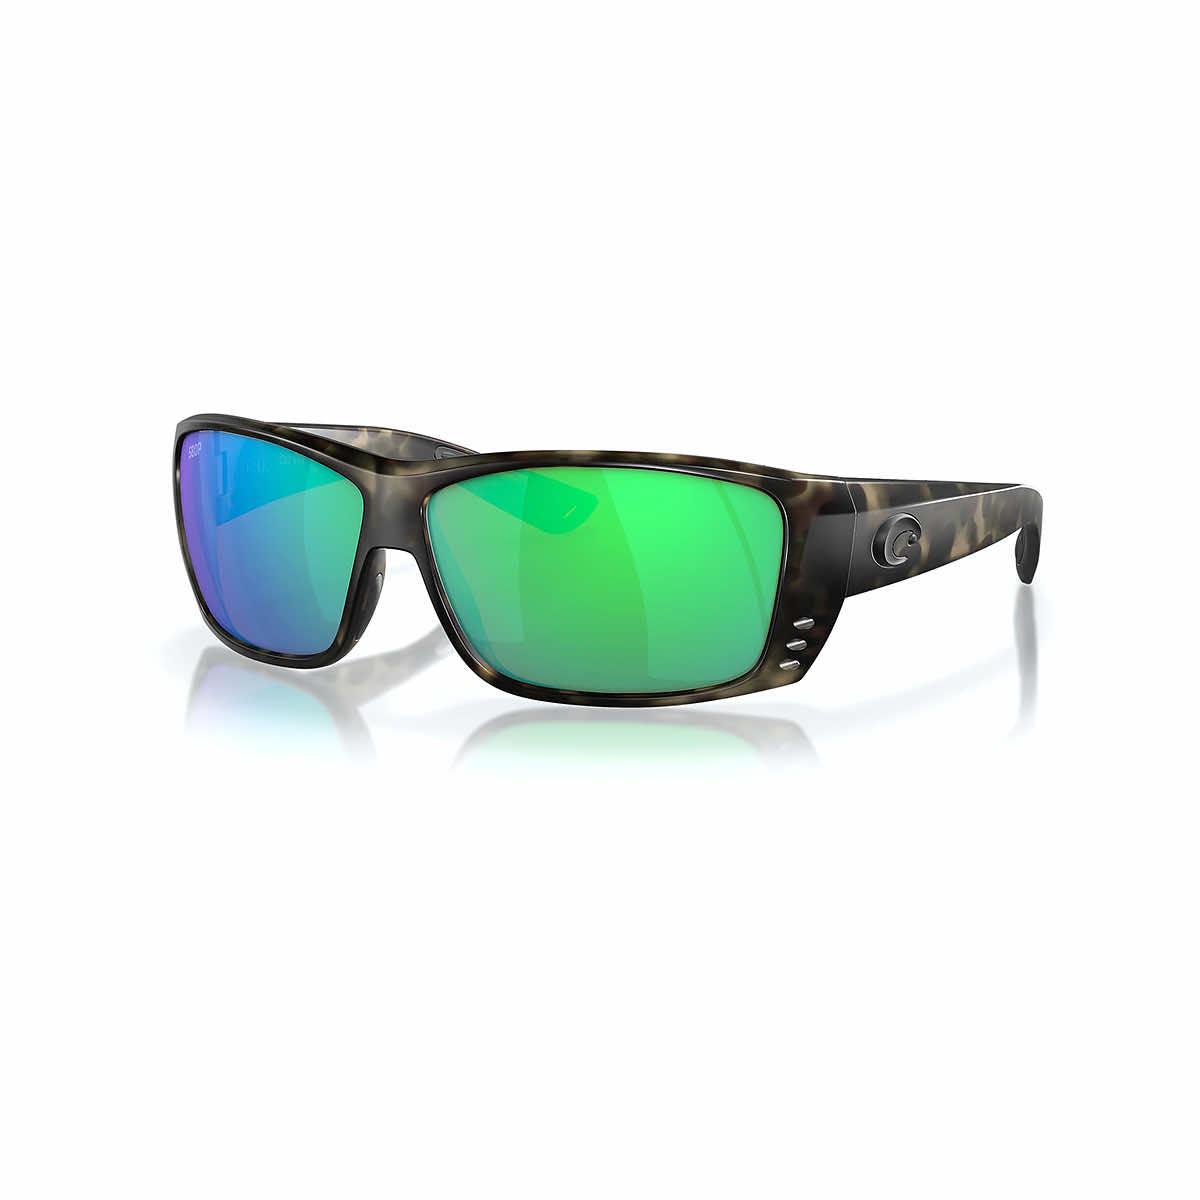  Cat Cay 580p Sunglasses - Polarized Plastic